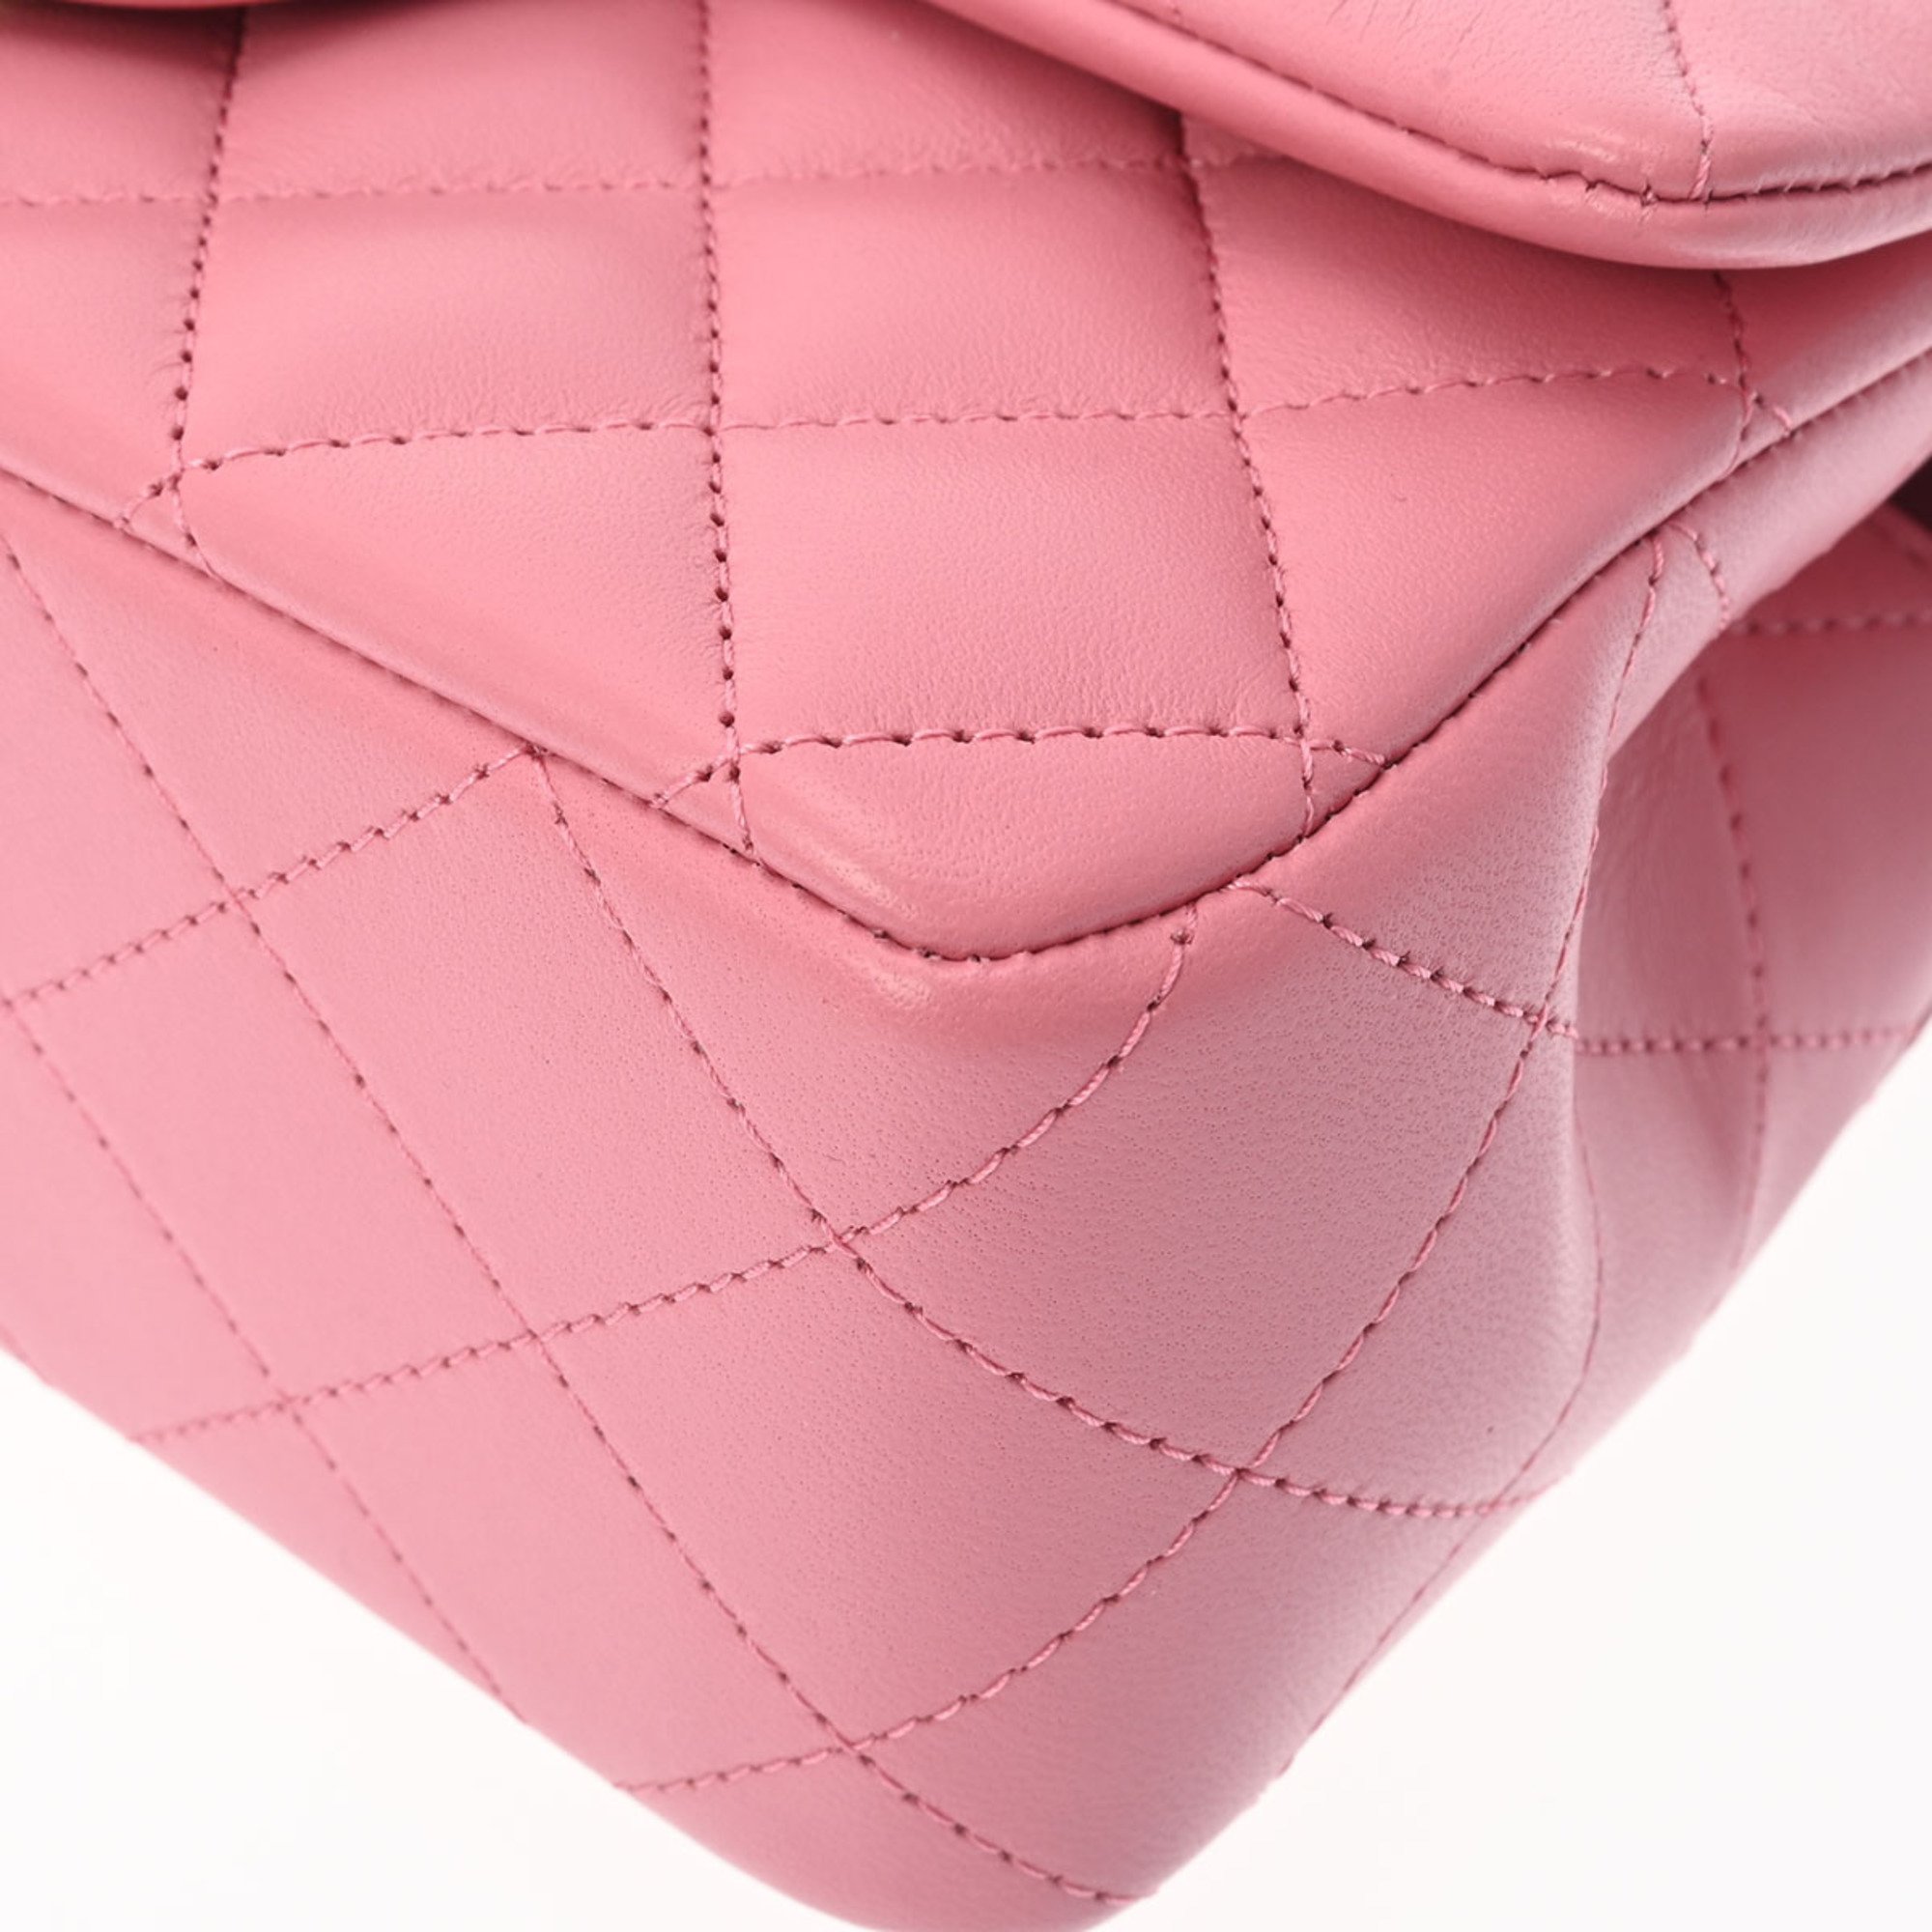 CHANEL Matelasse Flap Bag Chain Pink AS2431 Women's Lambskin Shoulder